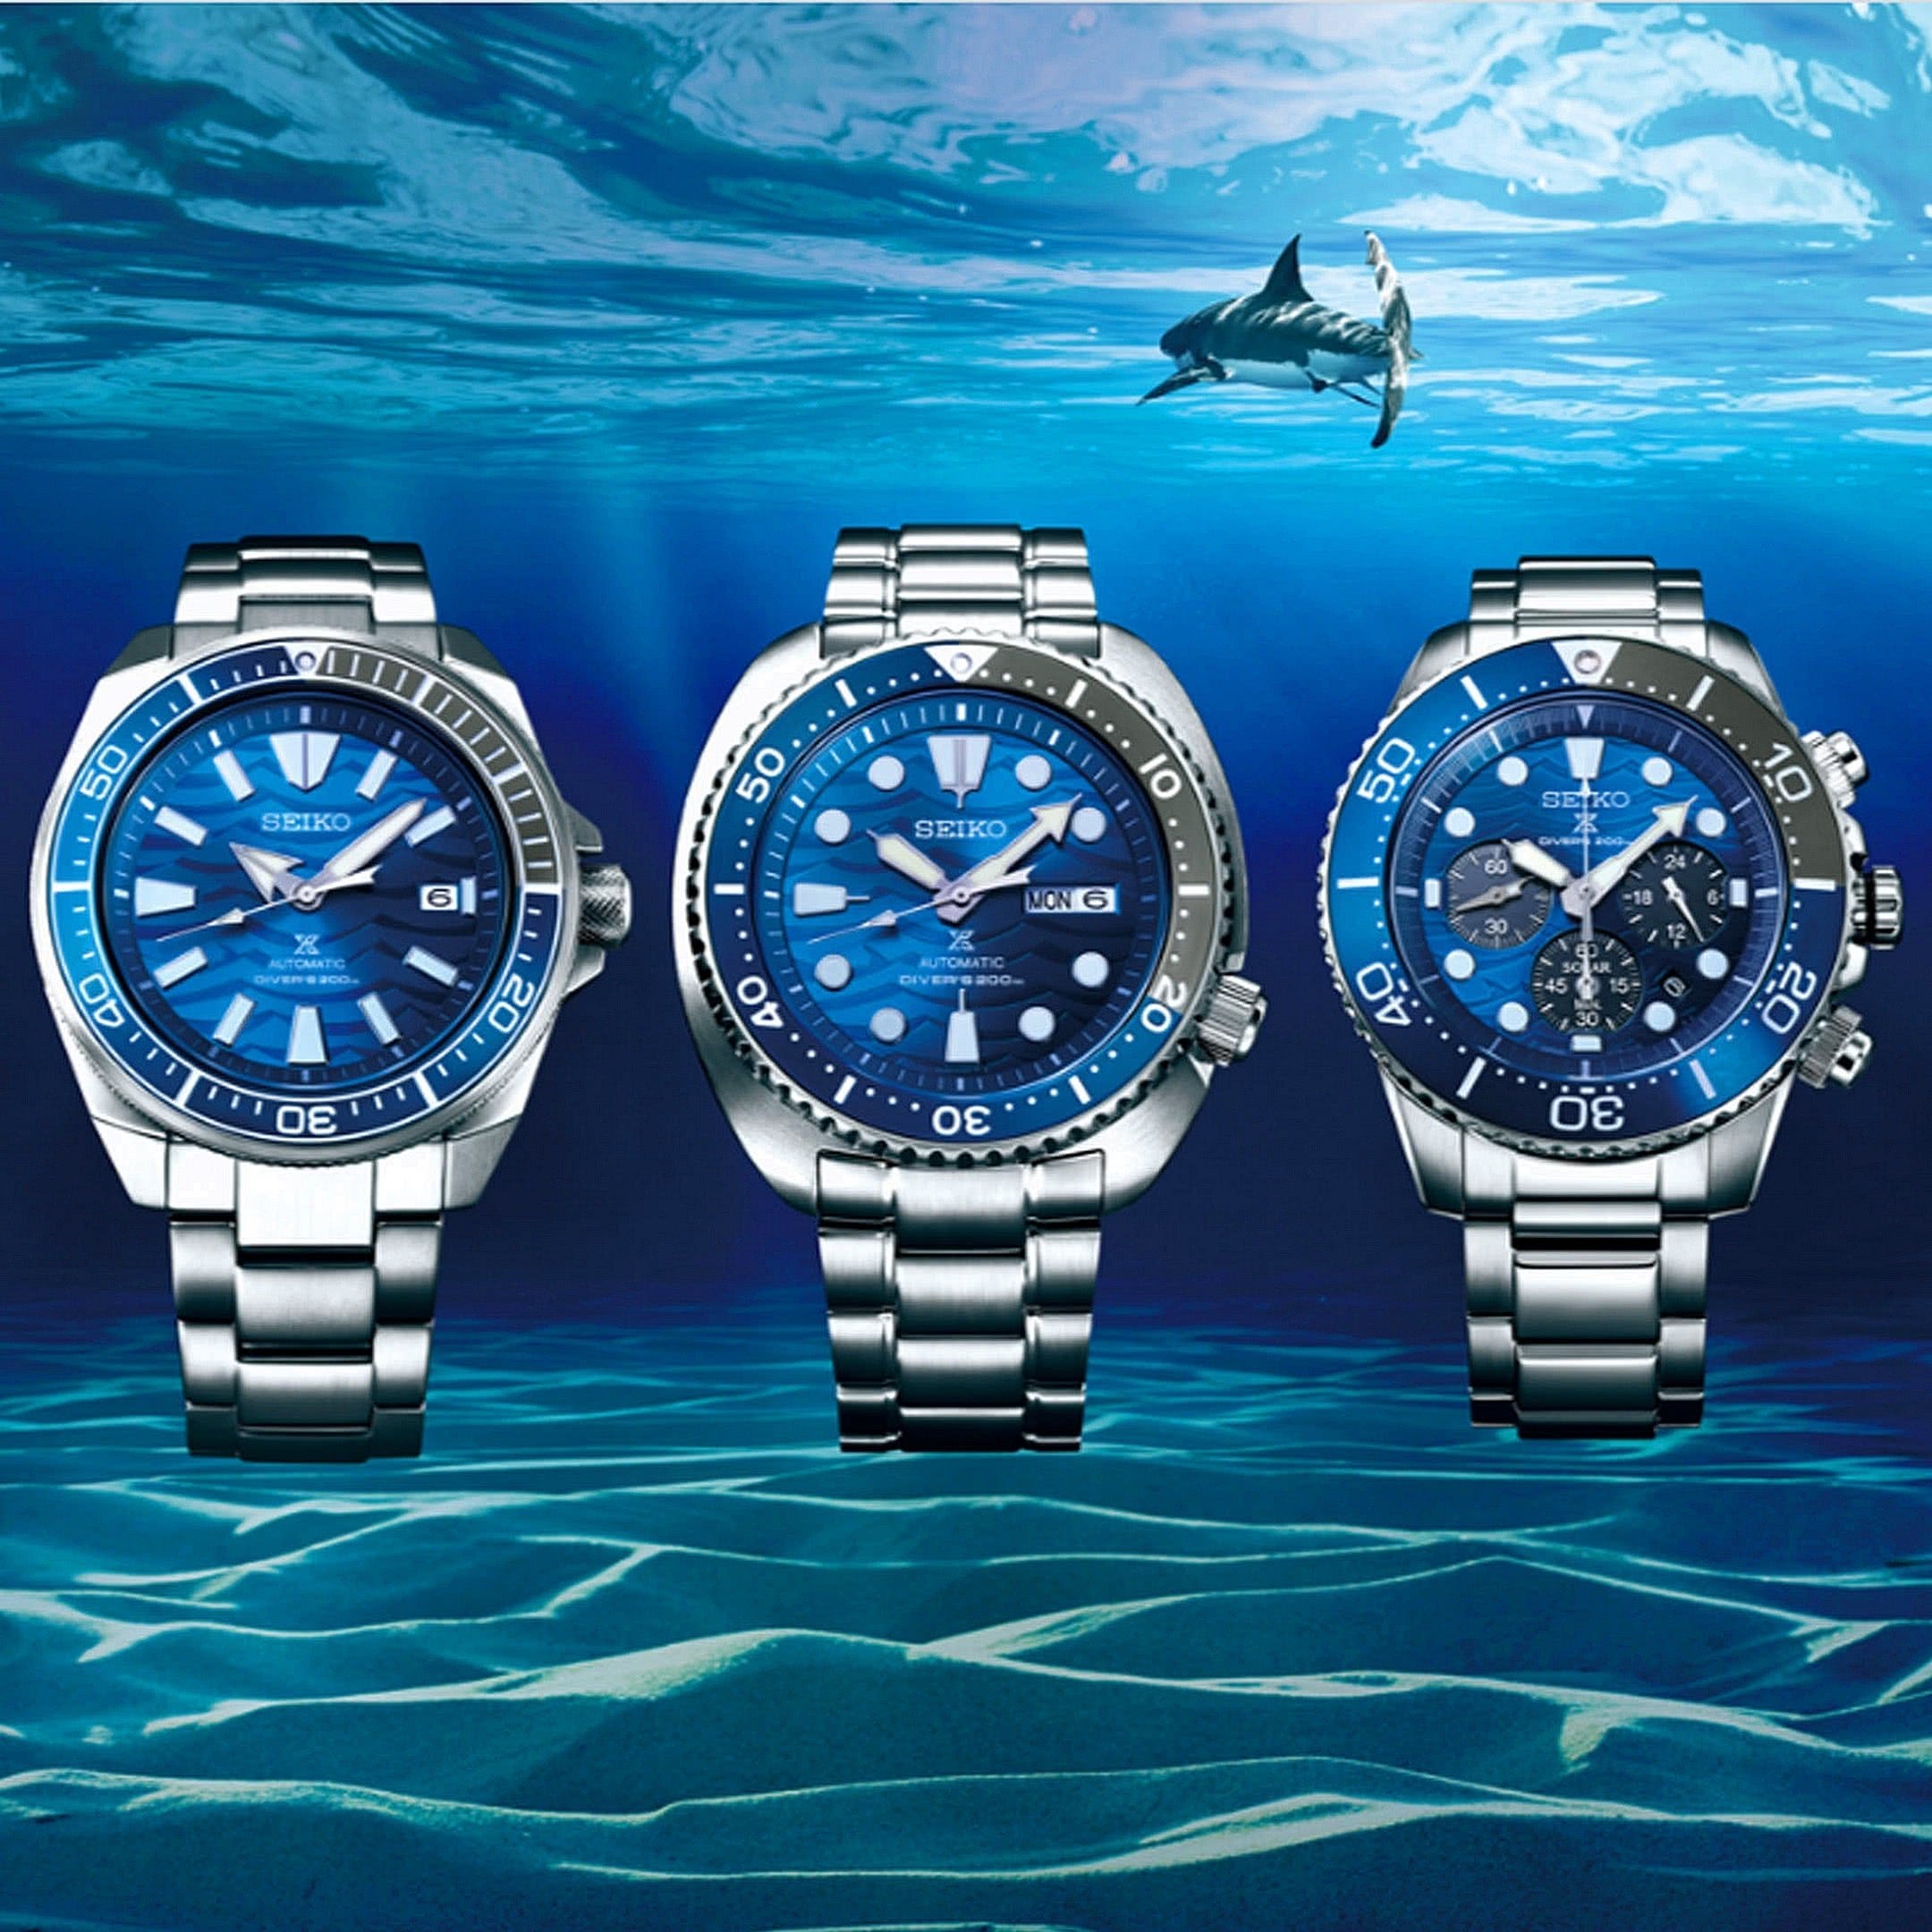 Shark s1 watch. Seiko Prospex save the Ocean. Prospex SRPD 21. Seiko x Prospex. Seiko Prospex save the Ocean Samurai.